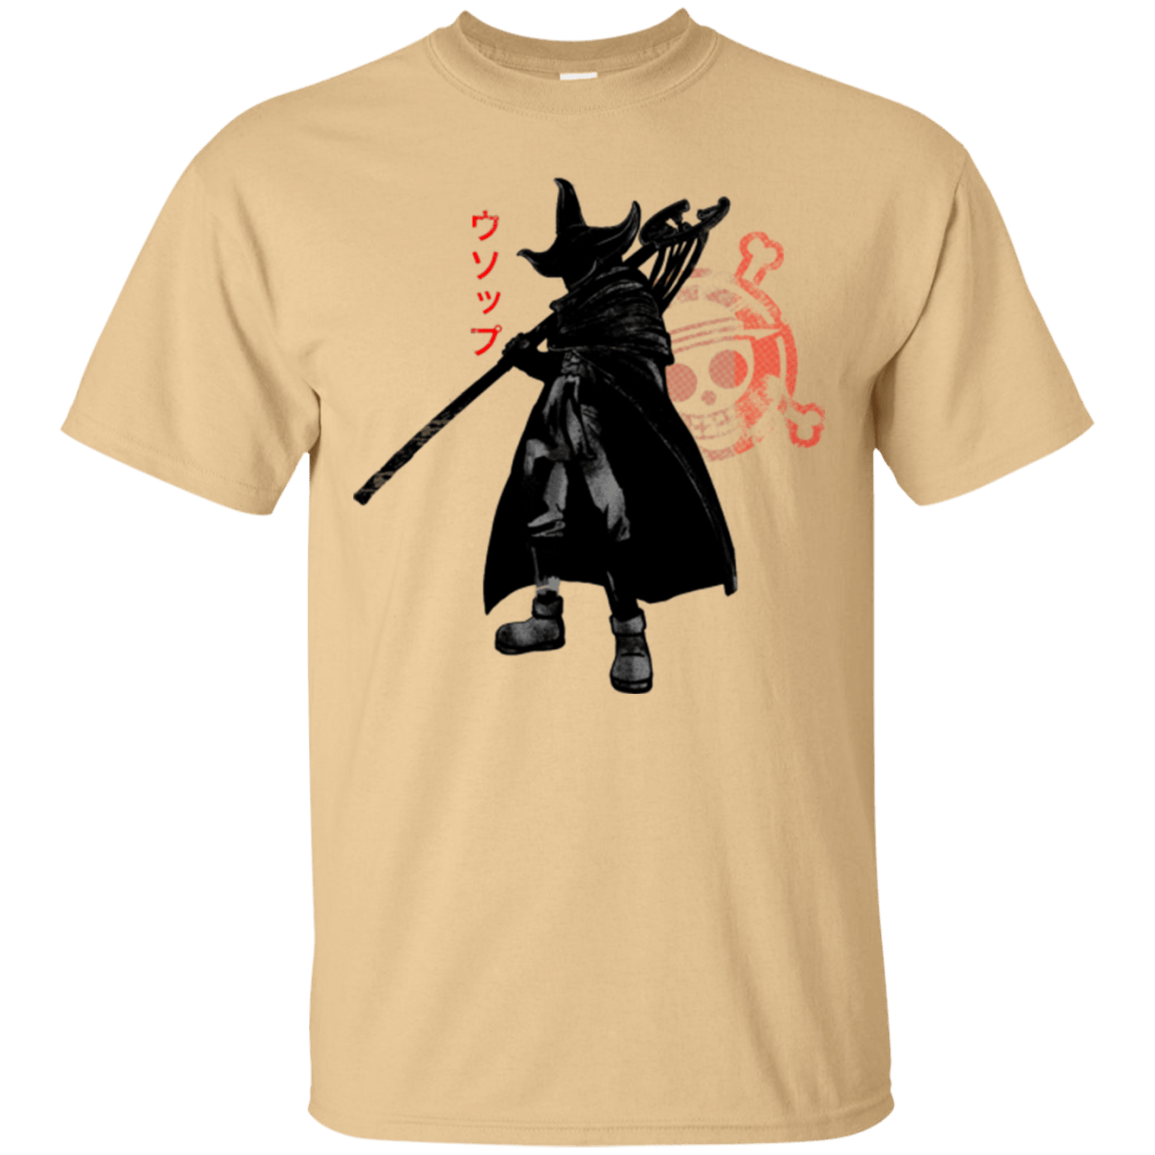 T-Shirts Vegas Gold / Small Pirate sniper T-Shirt